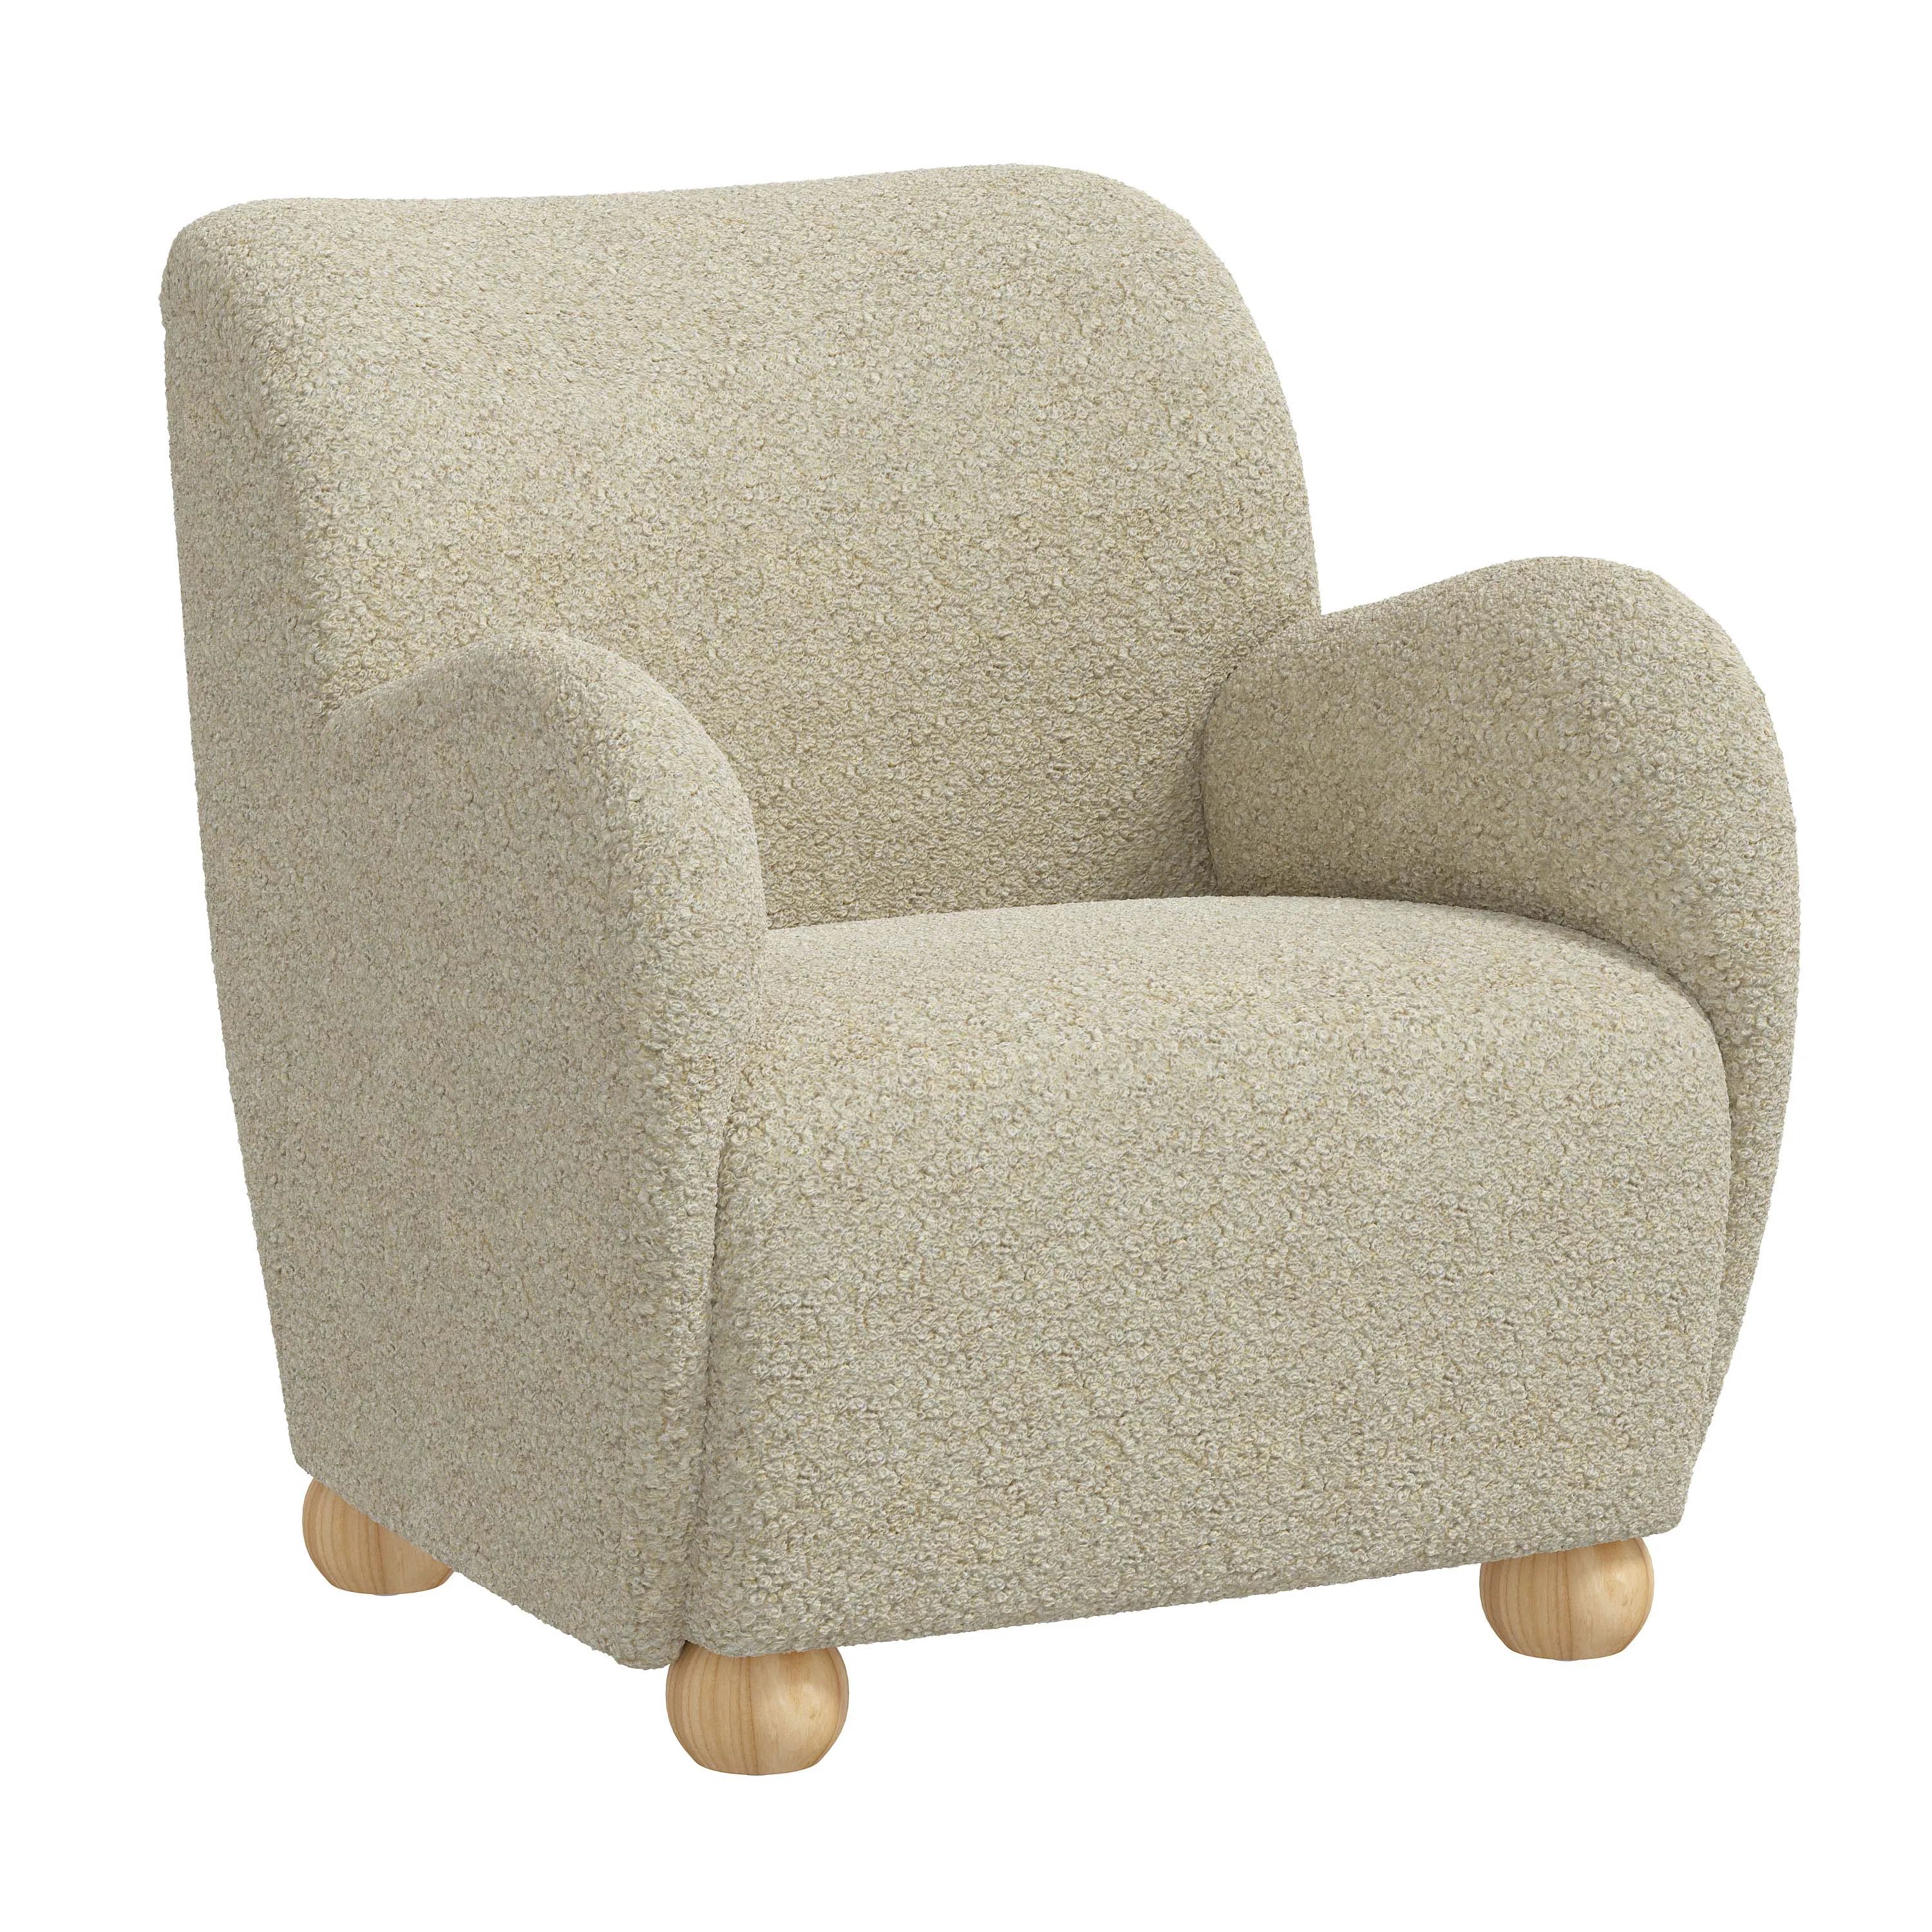 Cowen Upholstered Armchair | Wayfair North America